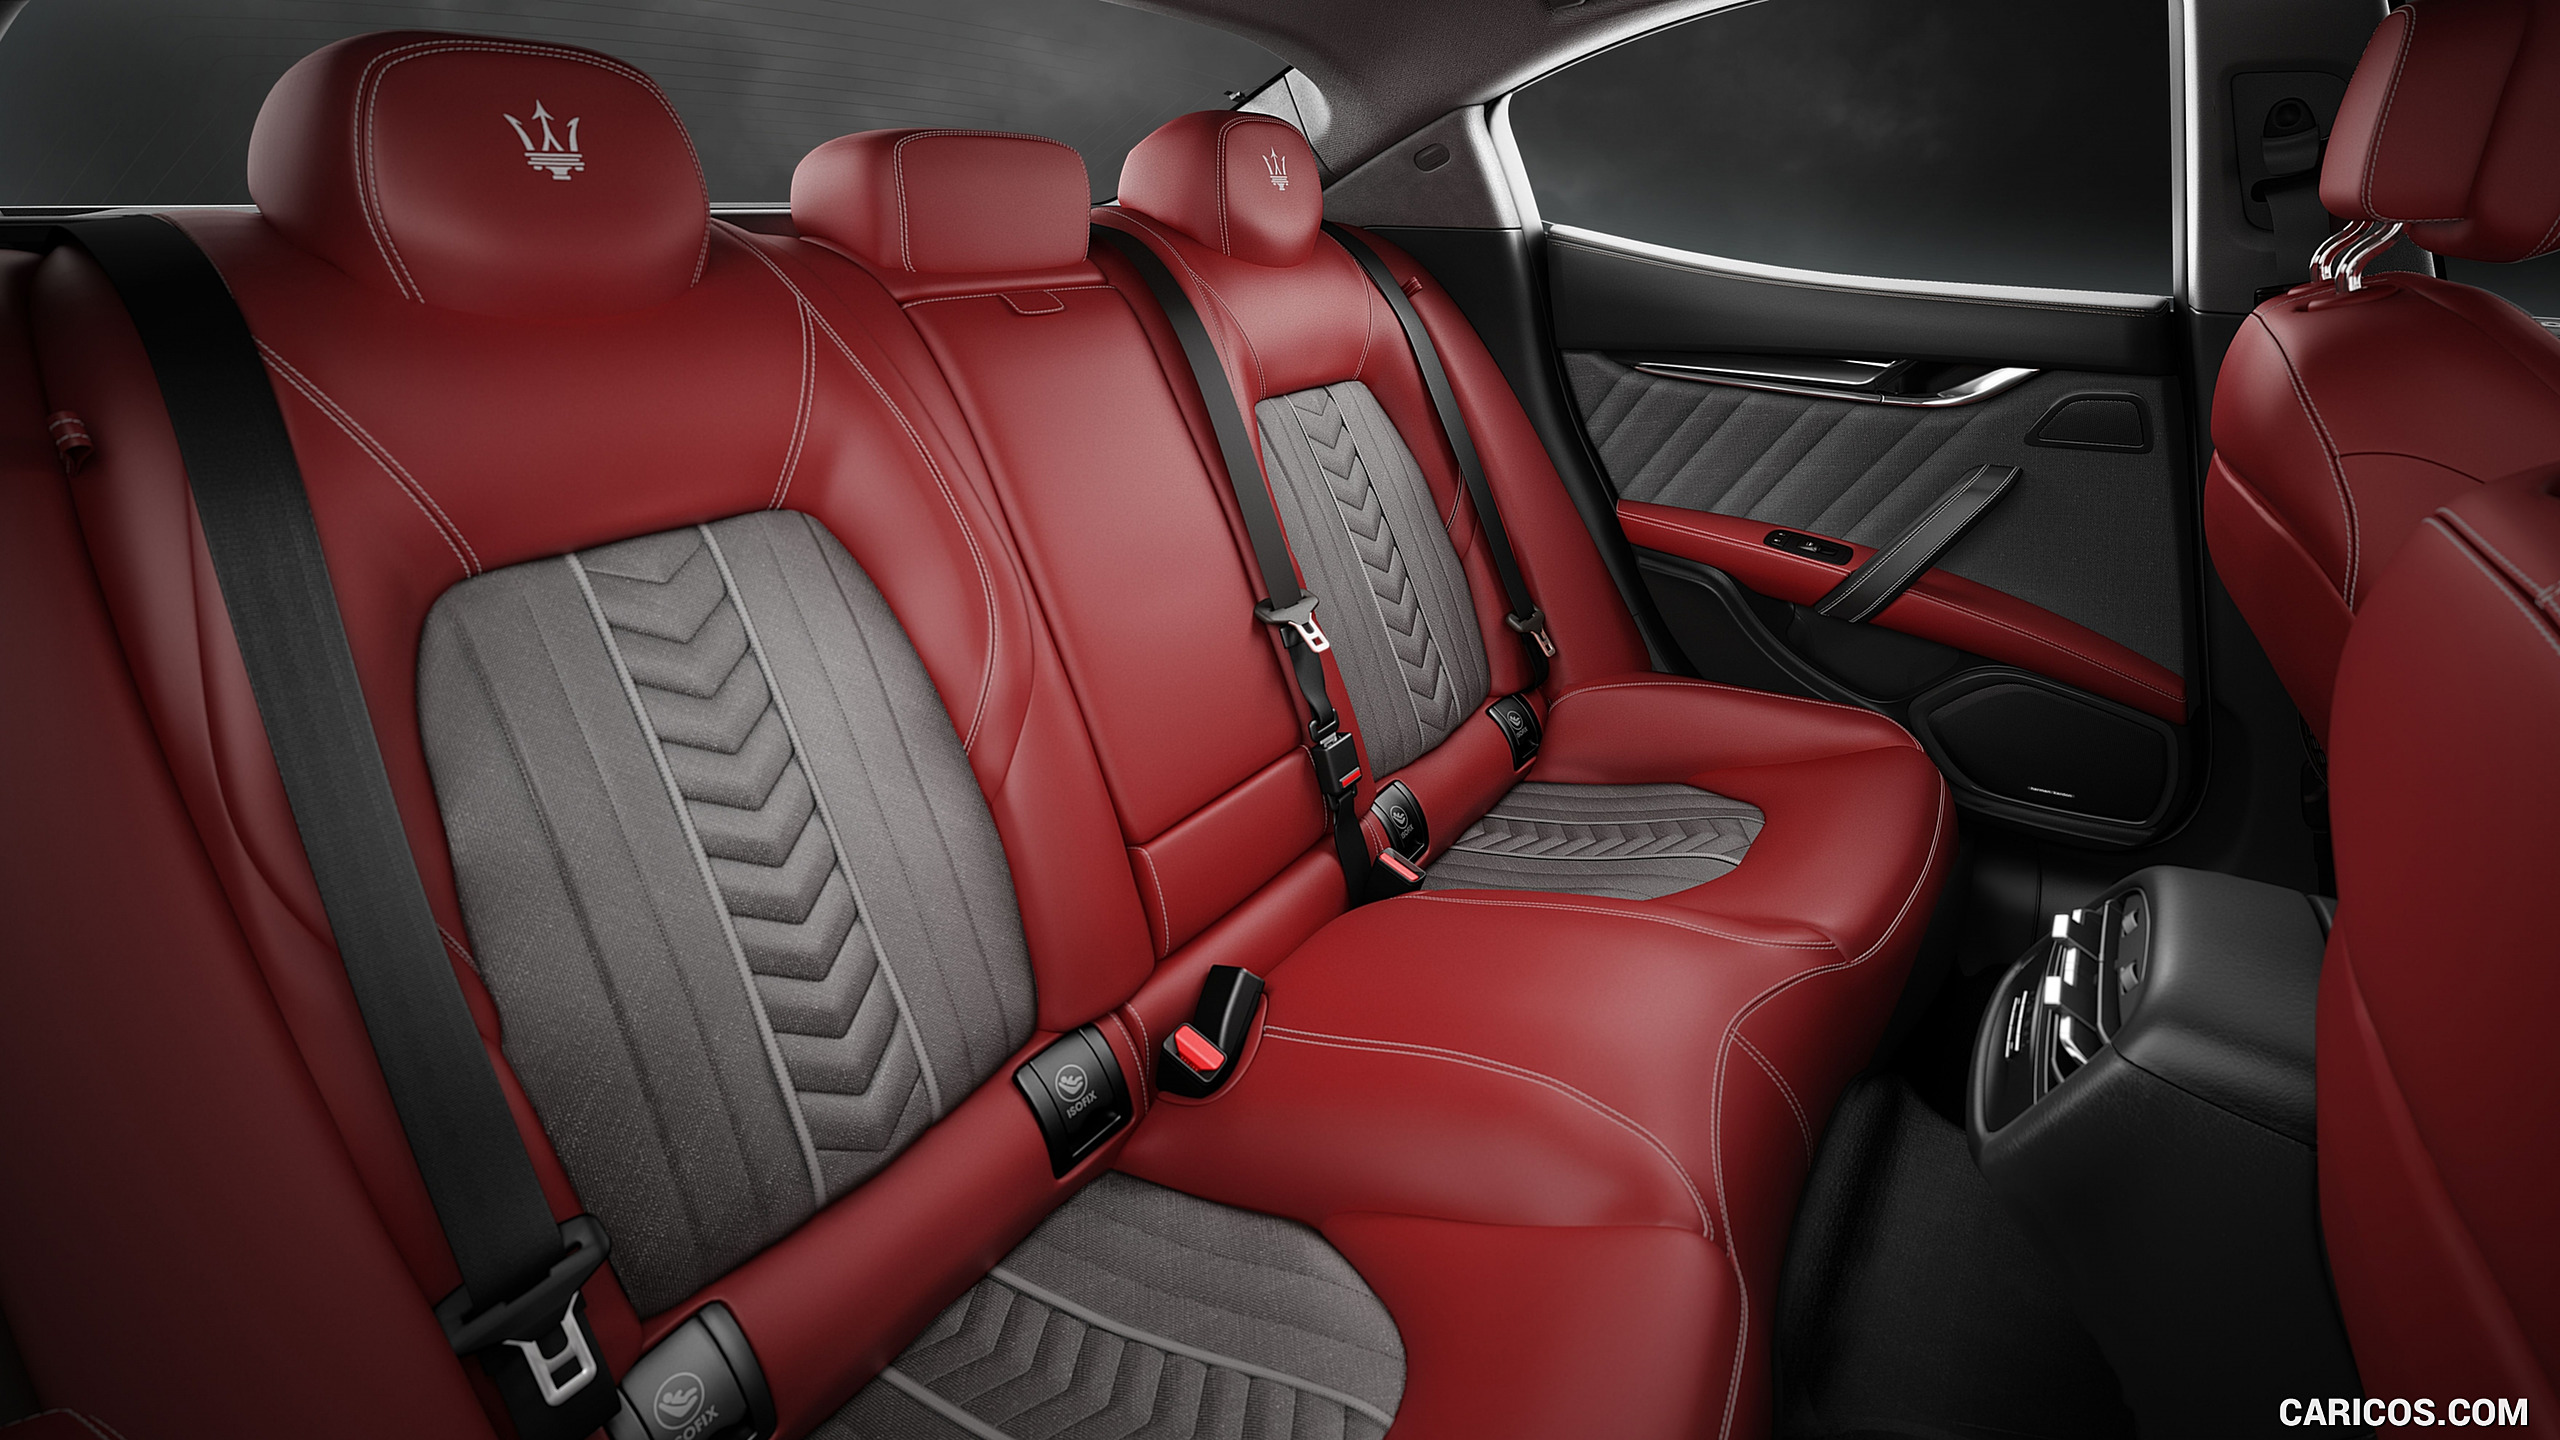 2017 Maserati Ghibli Luxury Package - Interior, Rear Seats, #76 of 85